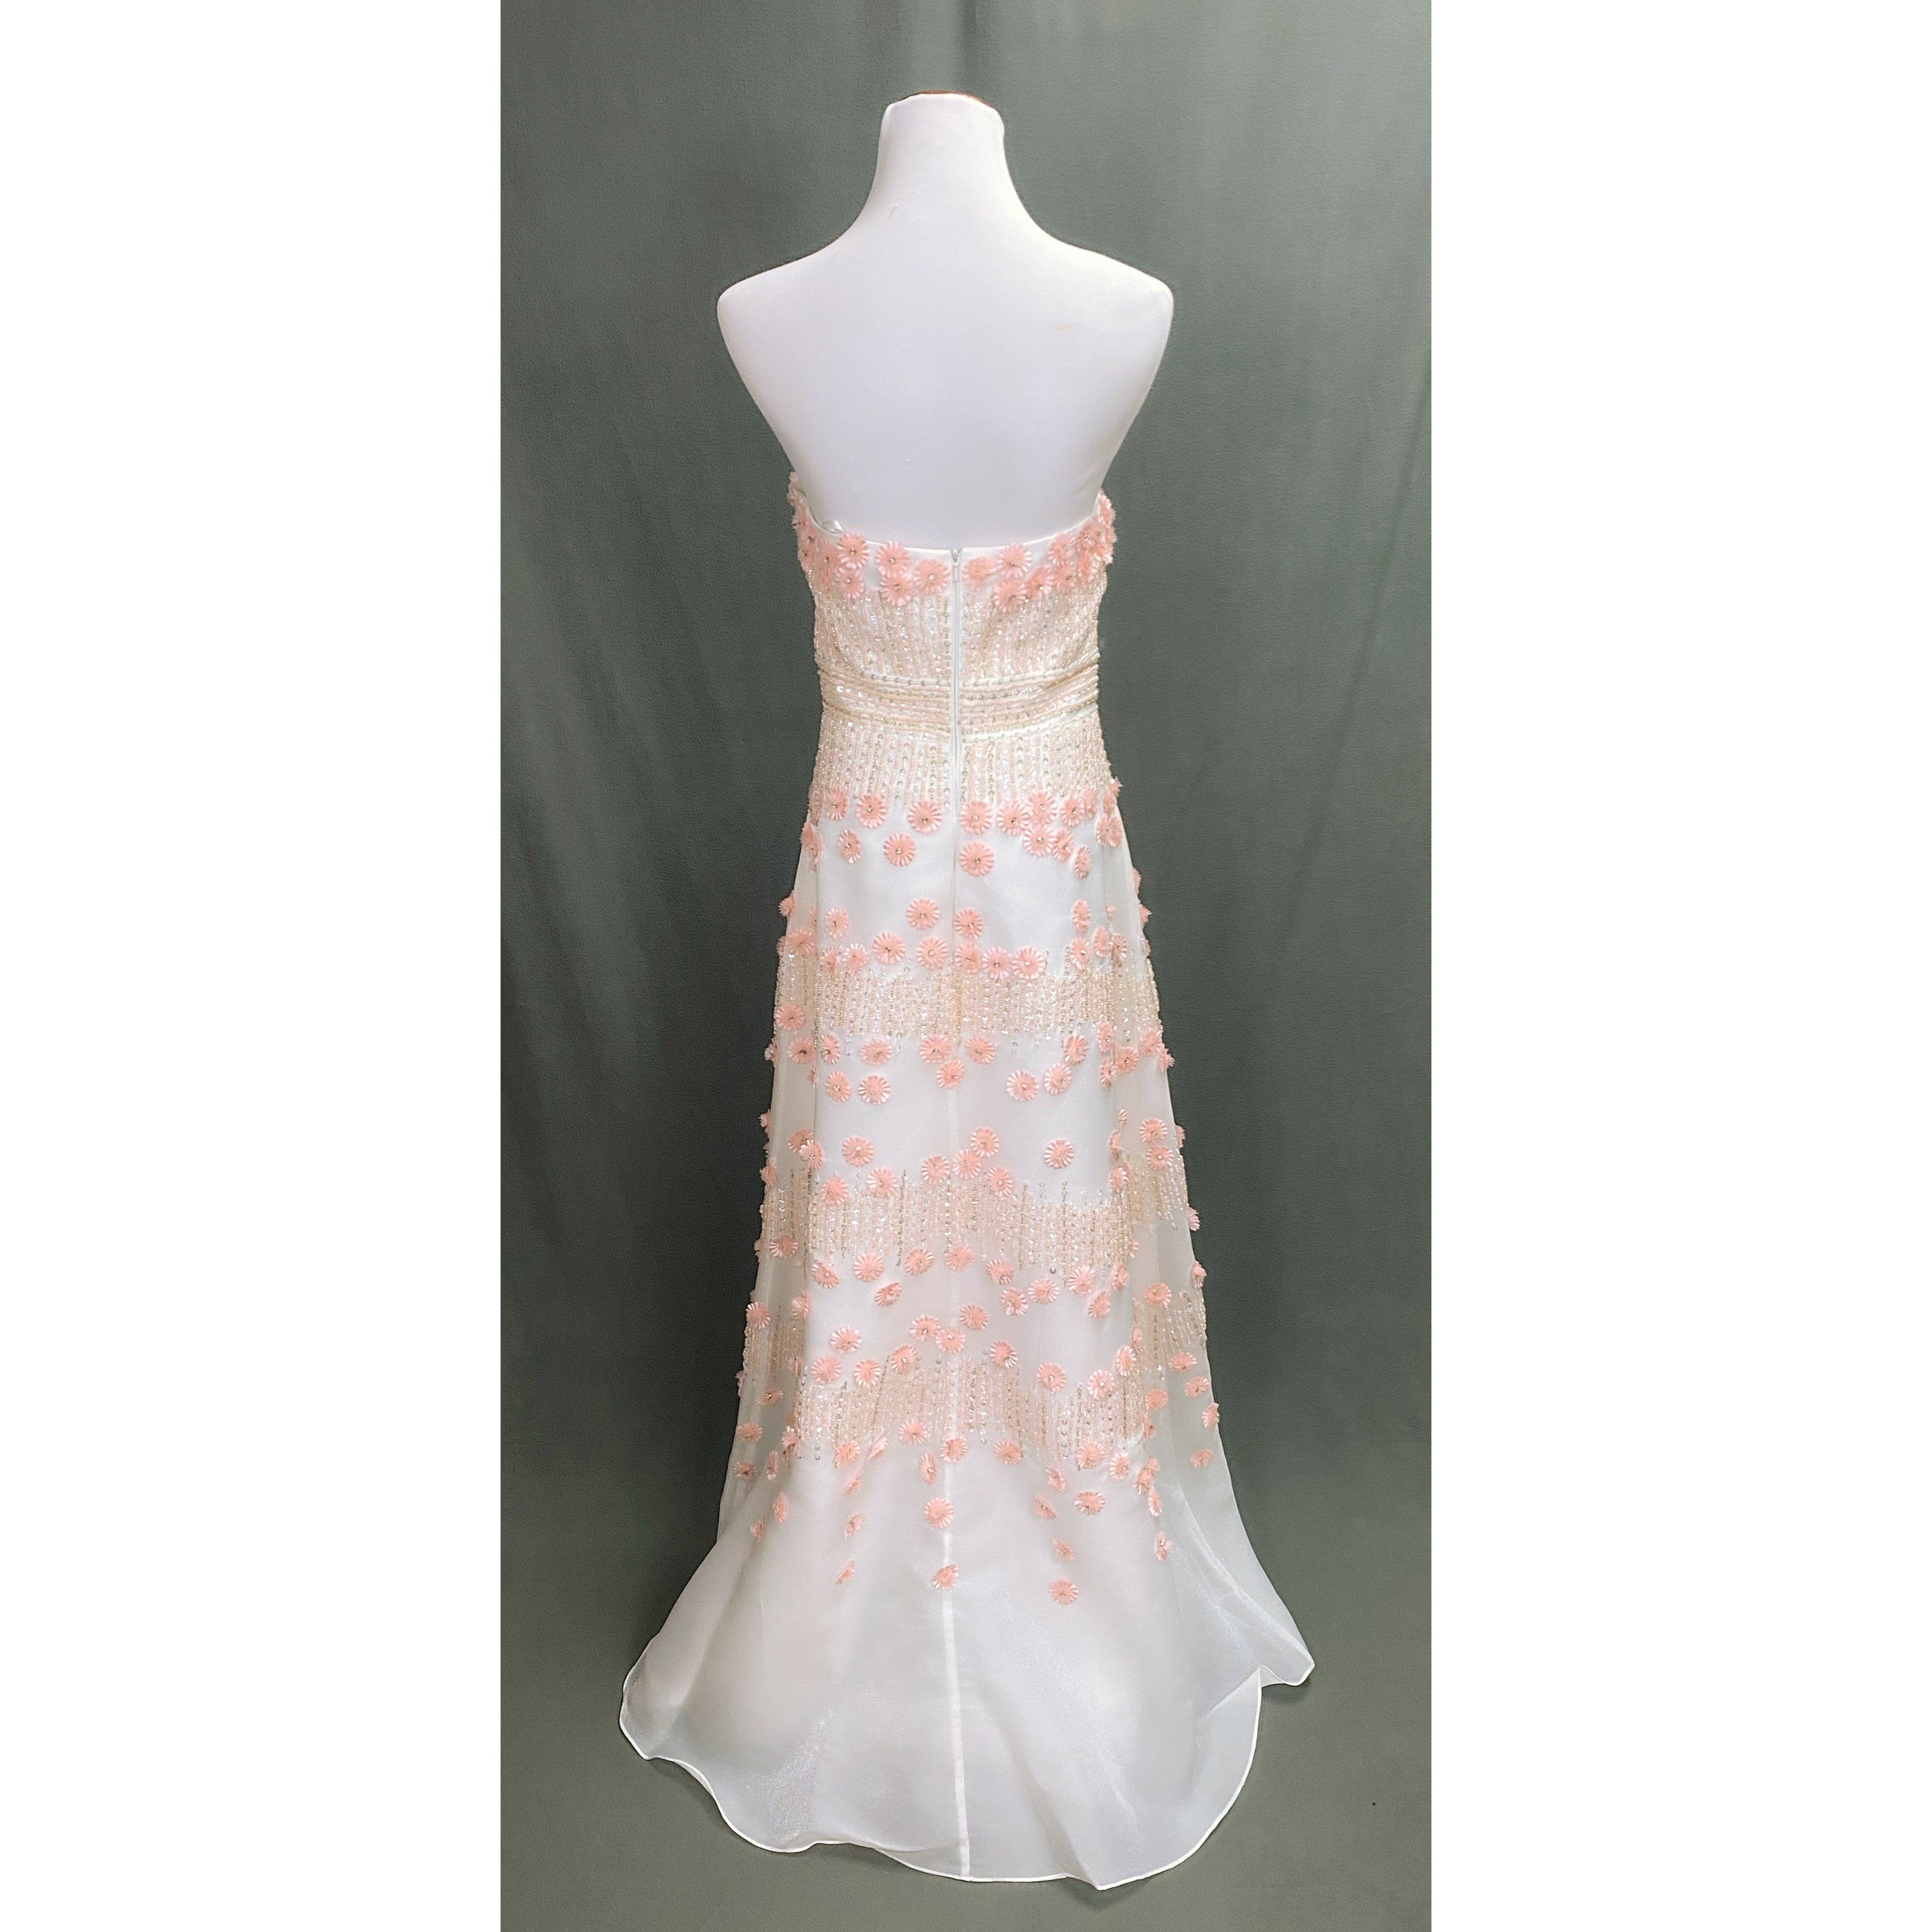 White & pink dress, size 6